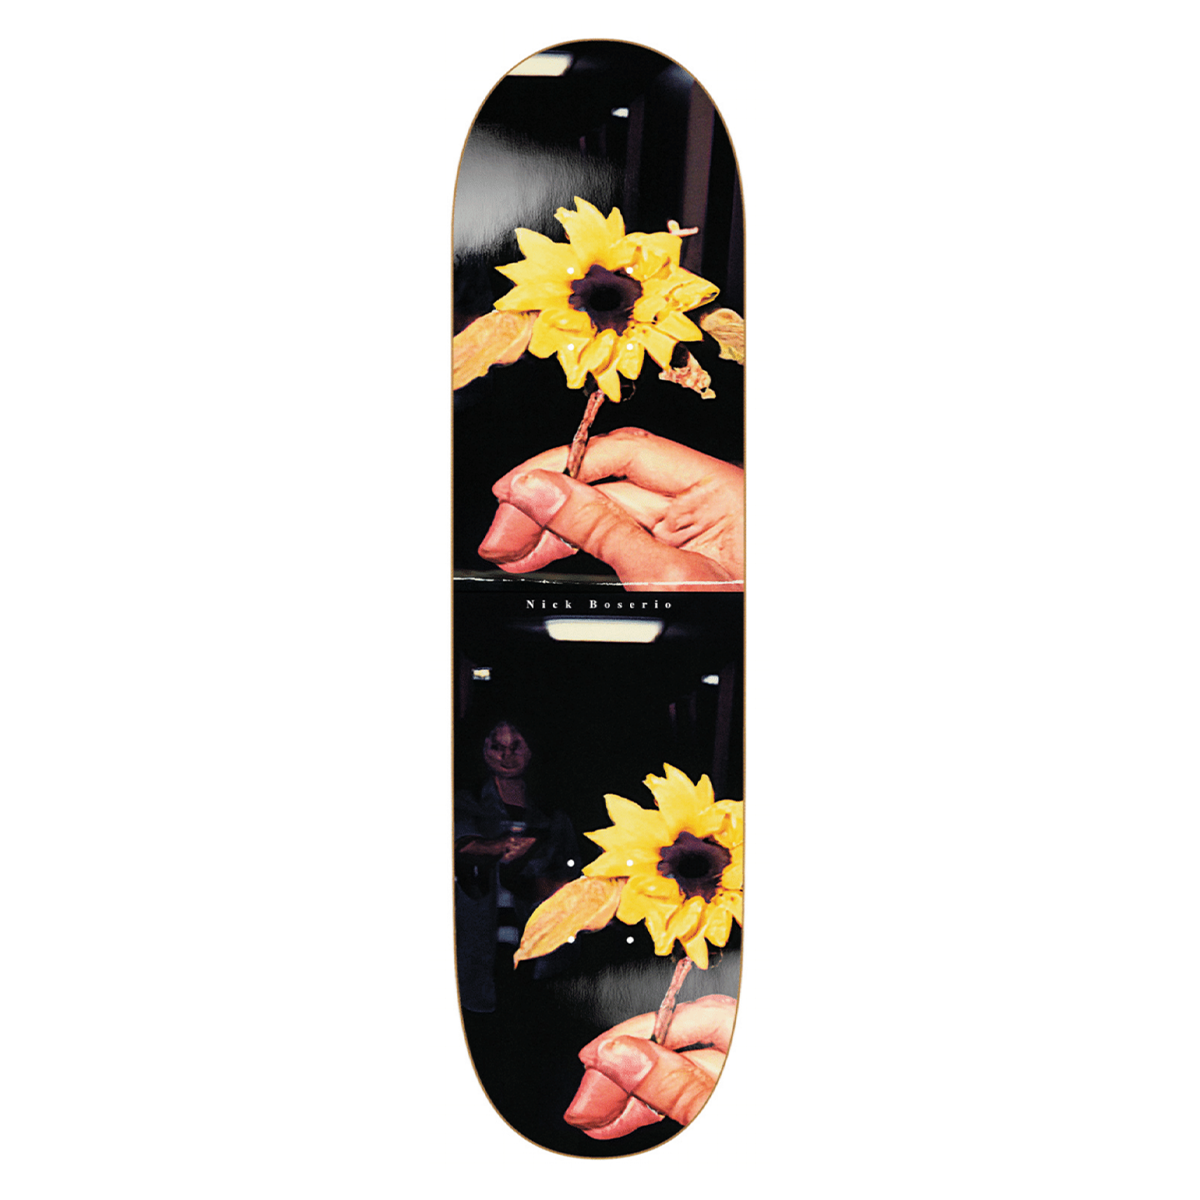 Polar Nick Boserio Flower Skate Deck - Assorted Sizes